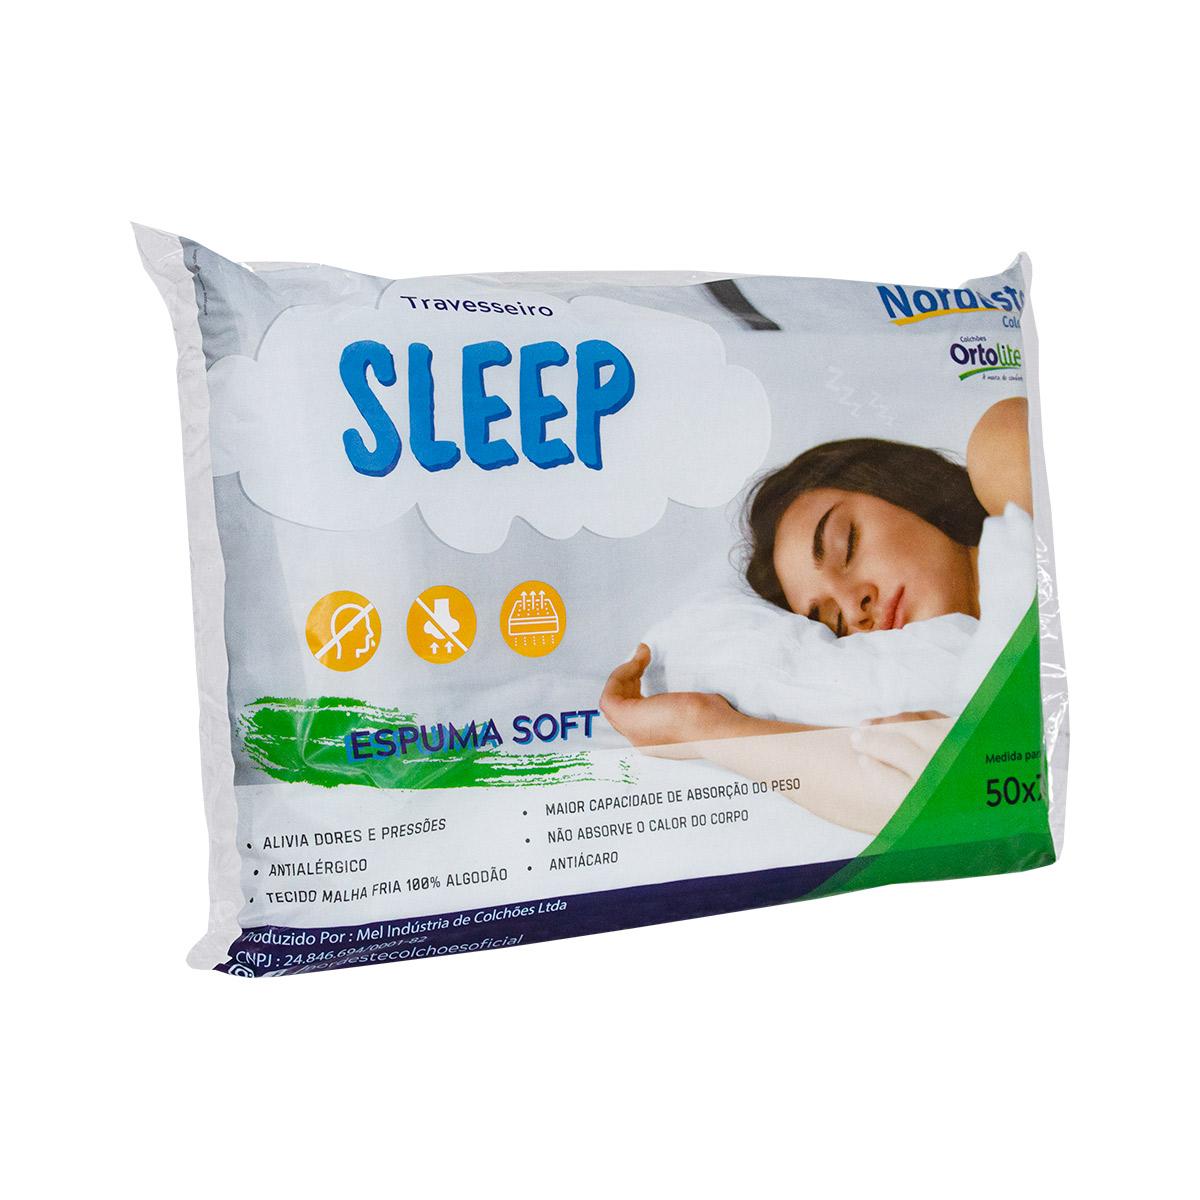 Travesseiro Sleep Espuma Soft